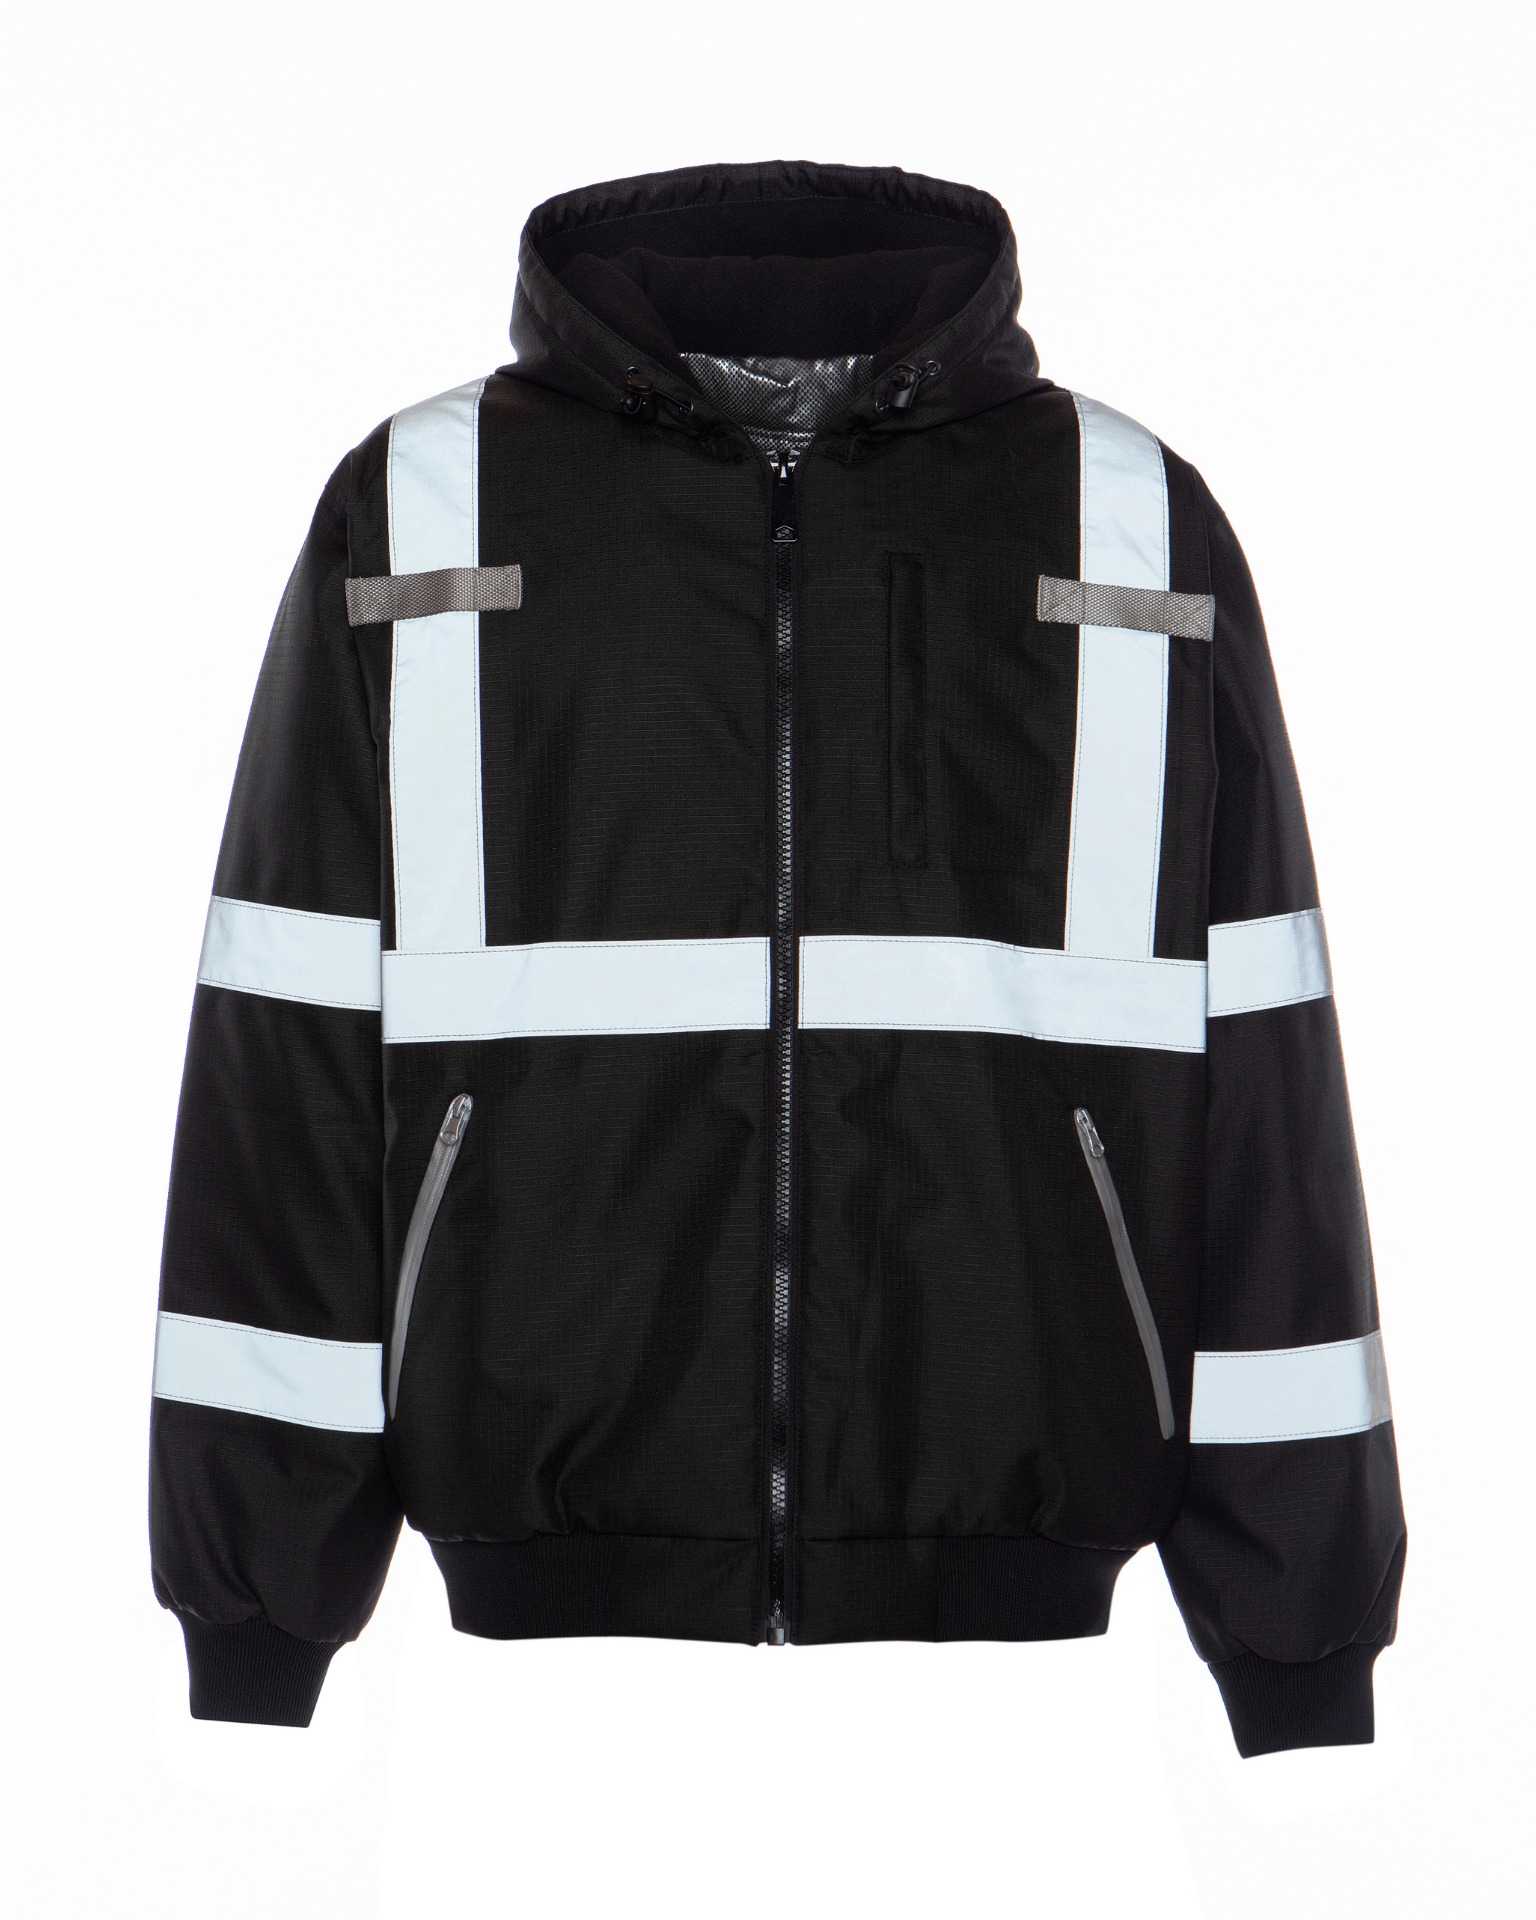 Reflective Waterproof Windbreaker Coat Jacket - China Reflective Jacket and  Safety Coat price